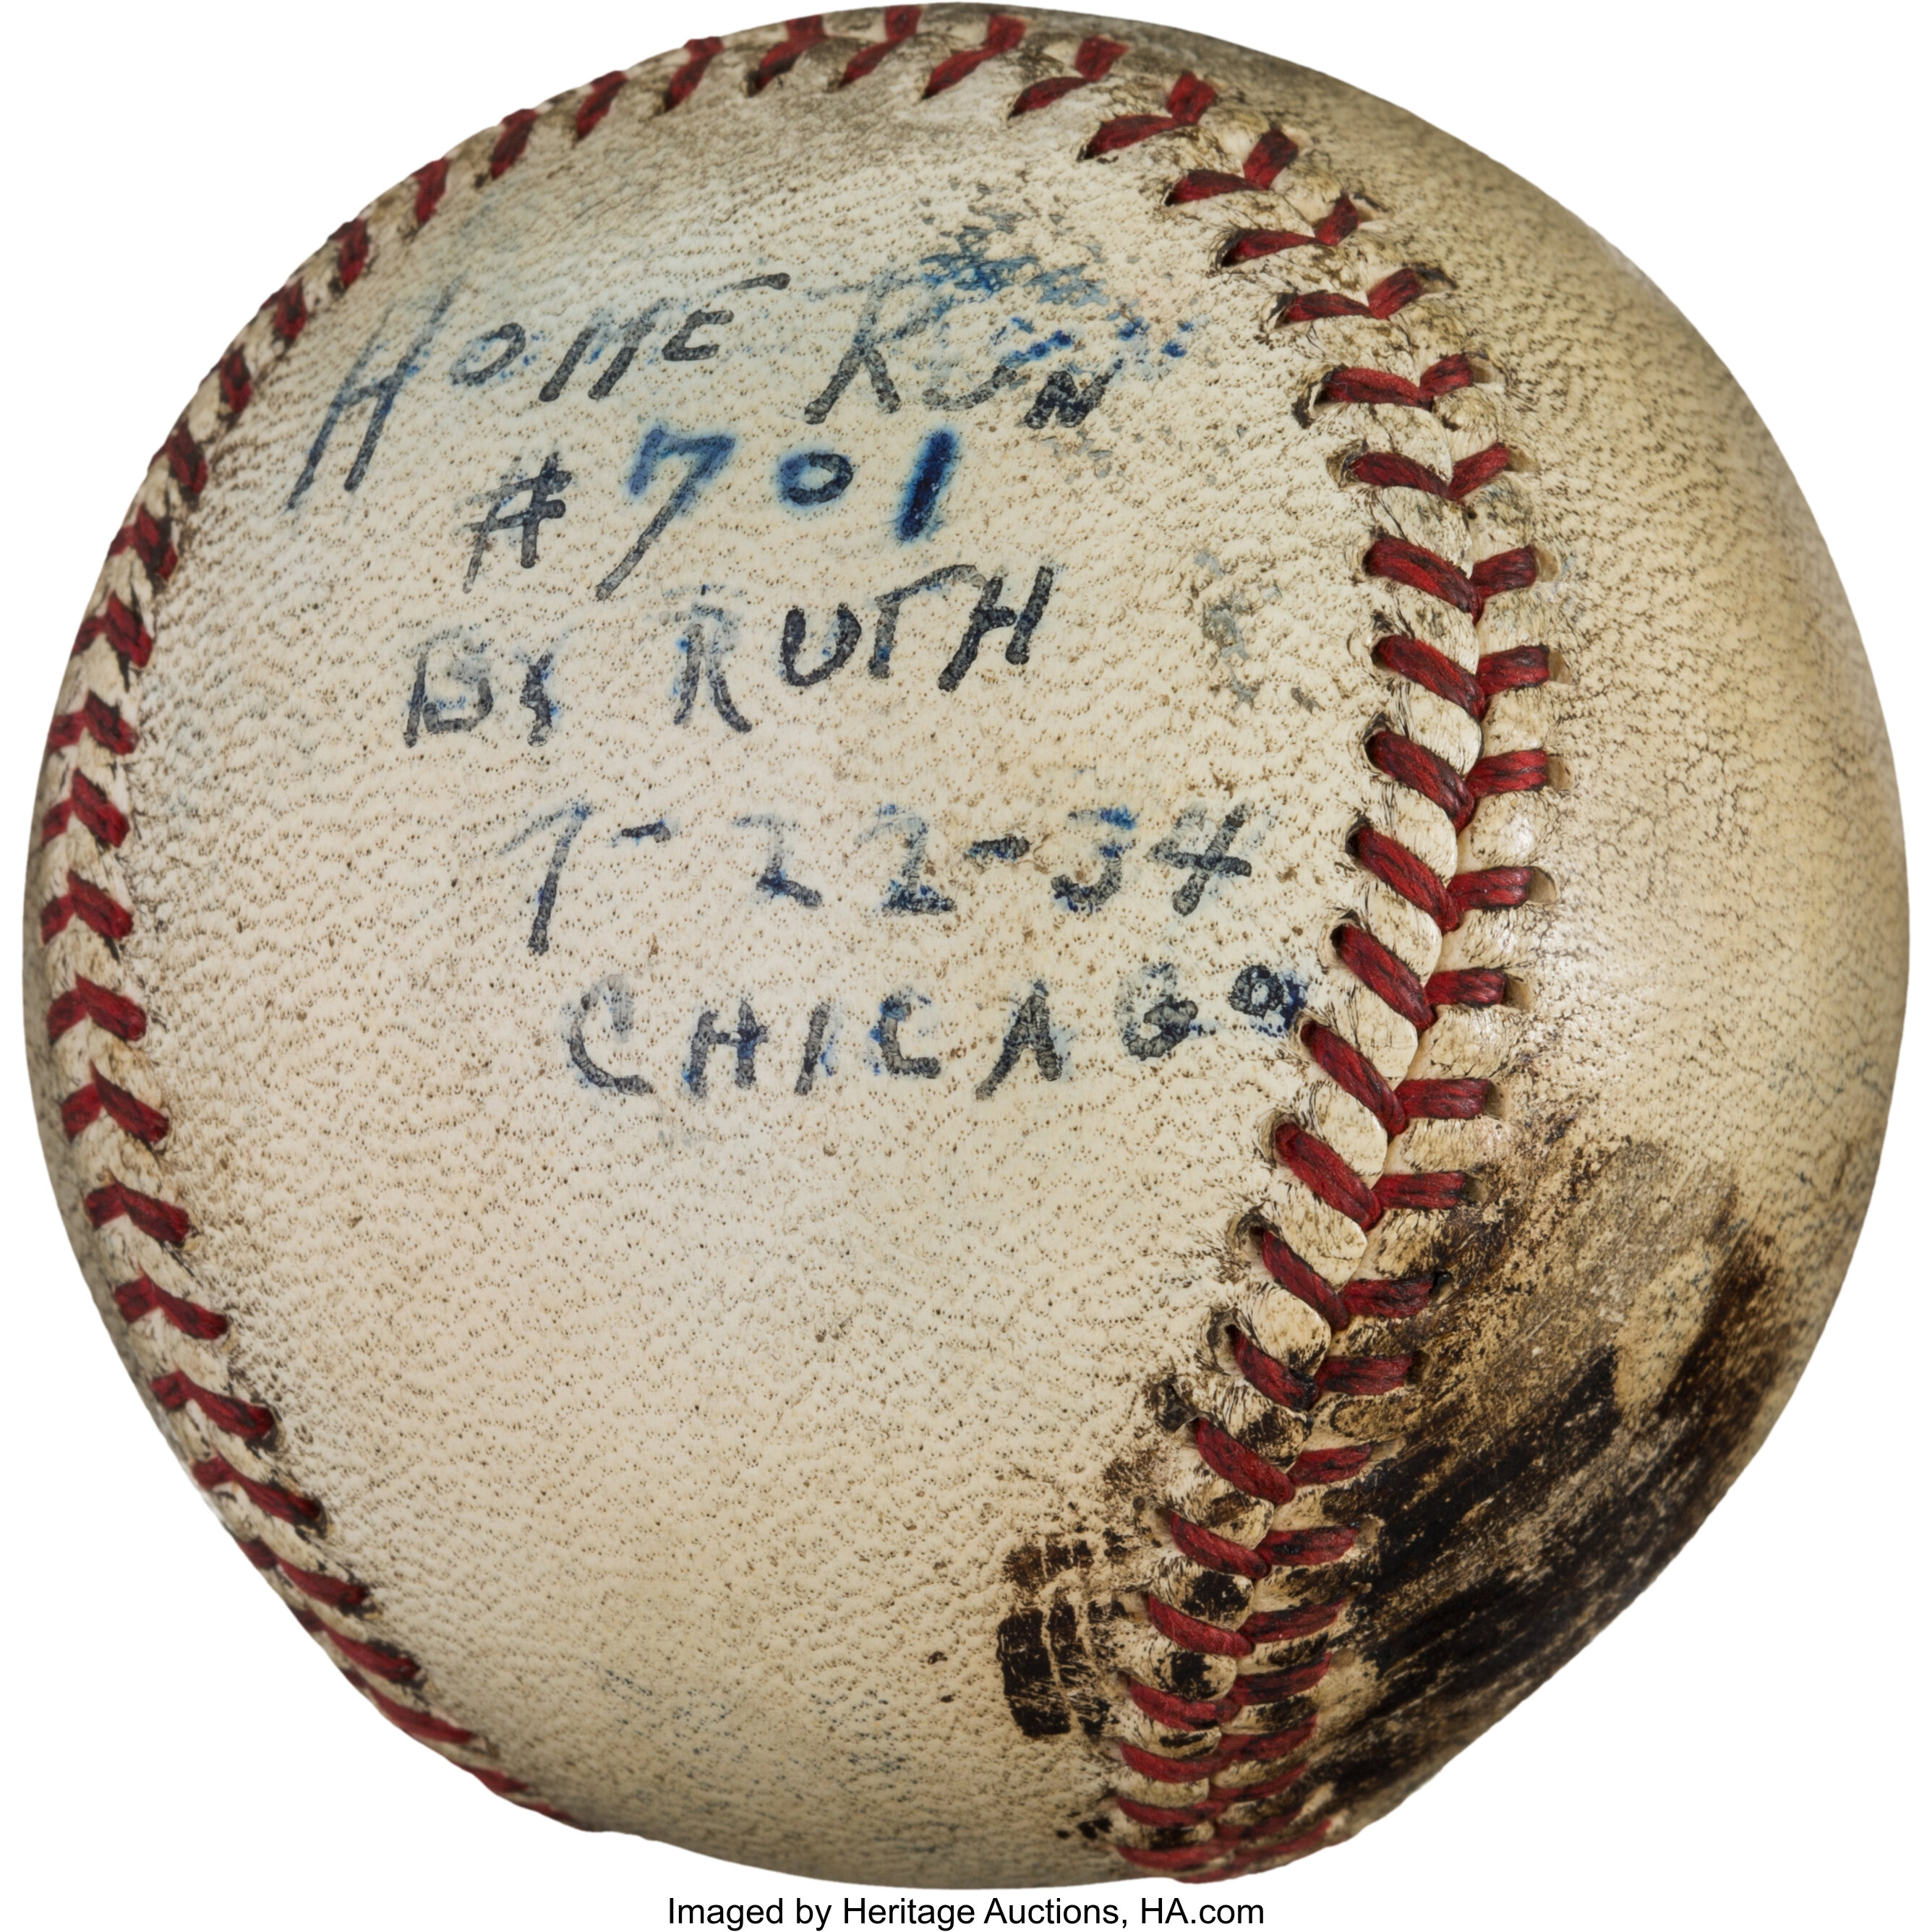 Babe Ruth rookie card sale hits a home run at auction